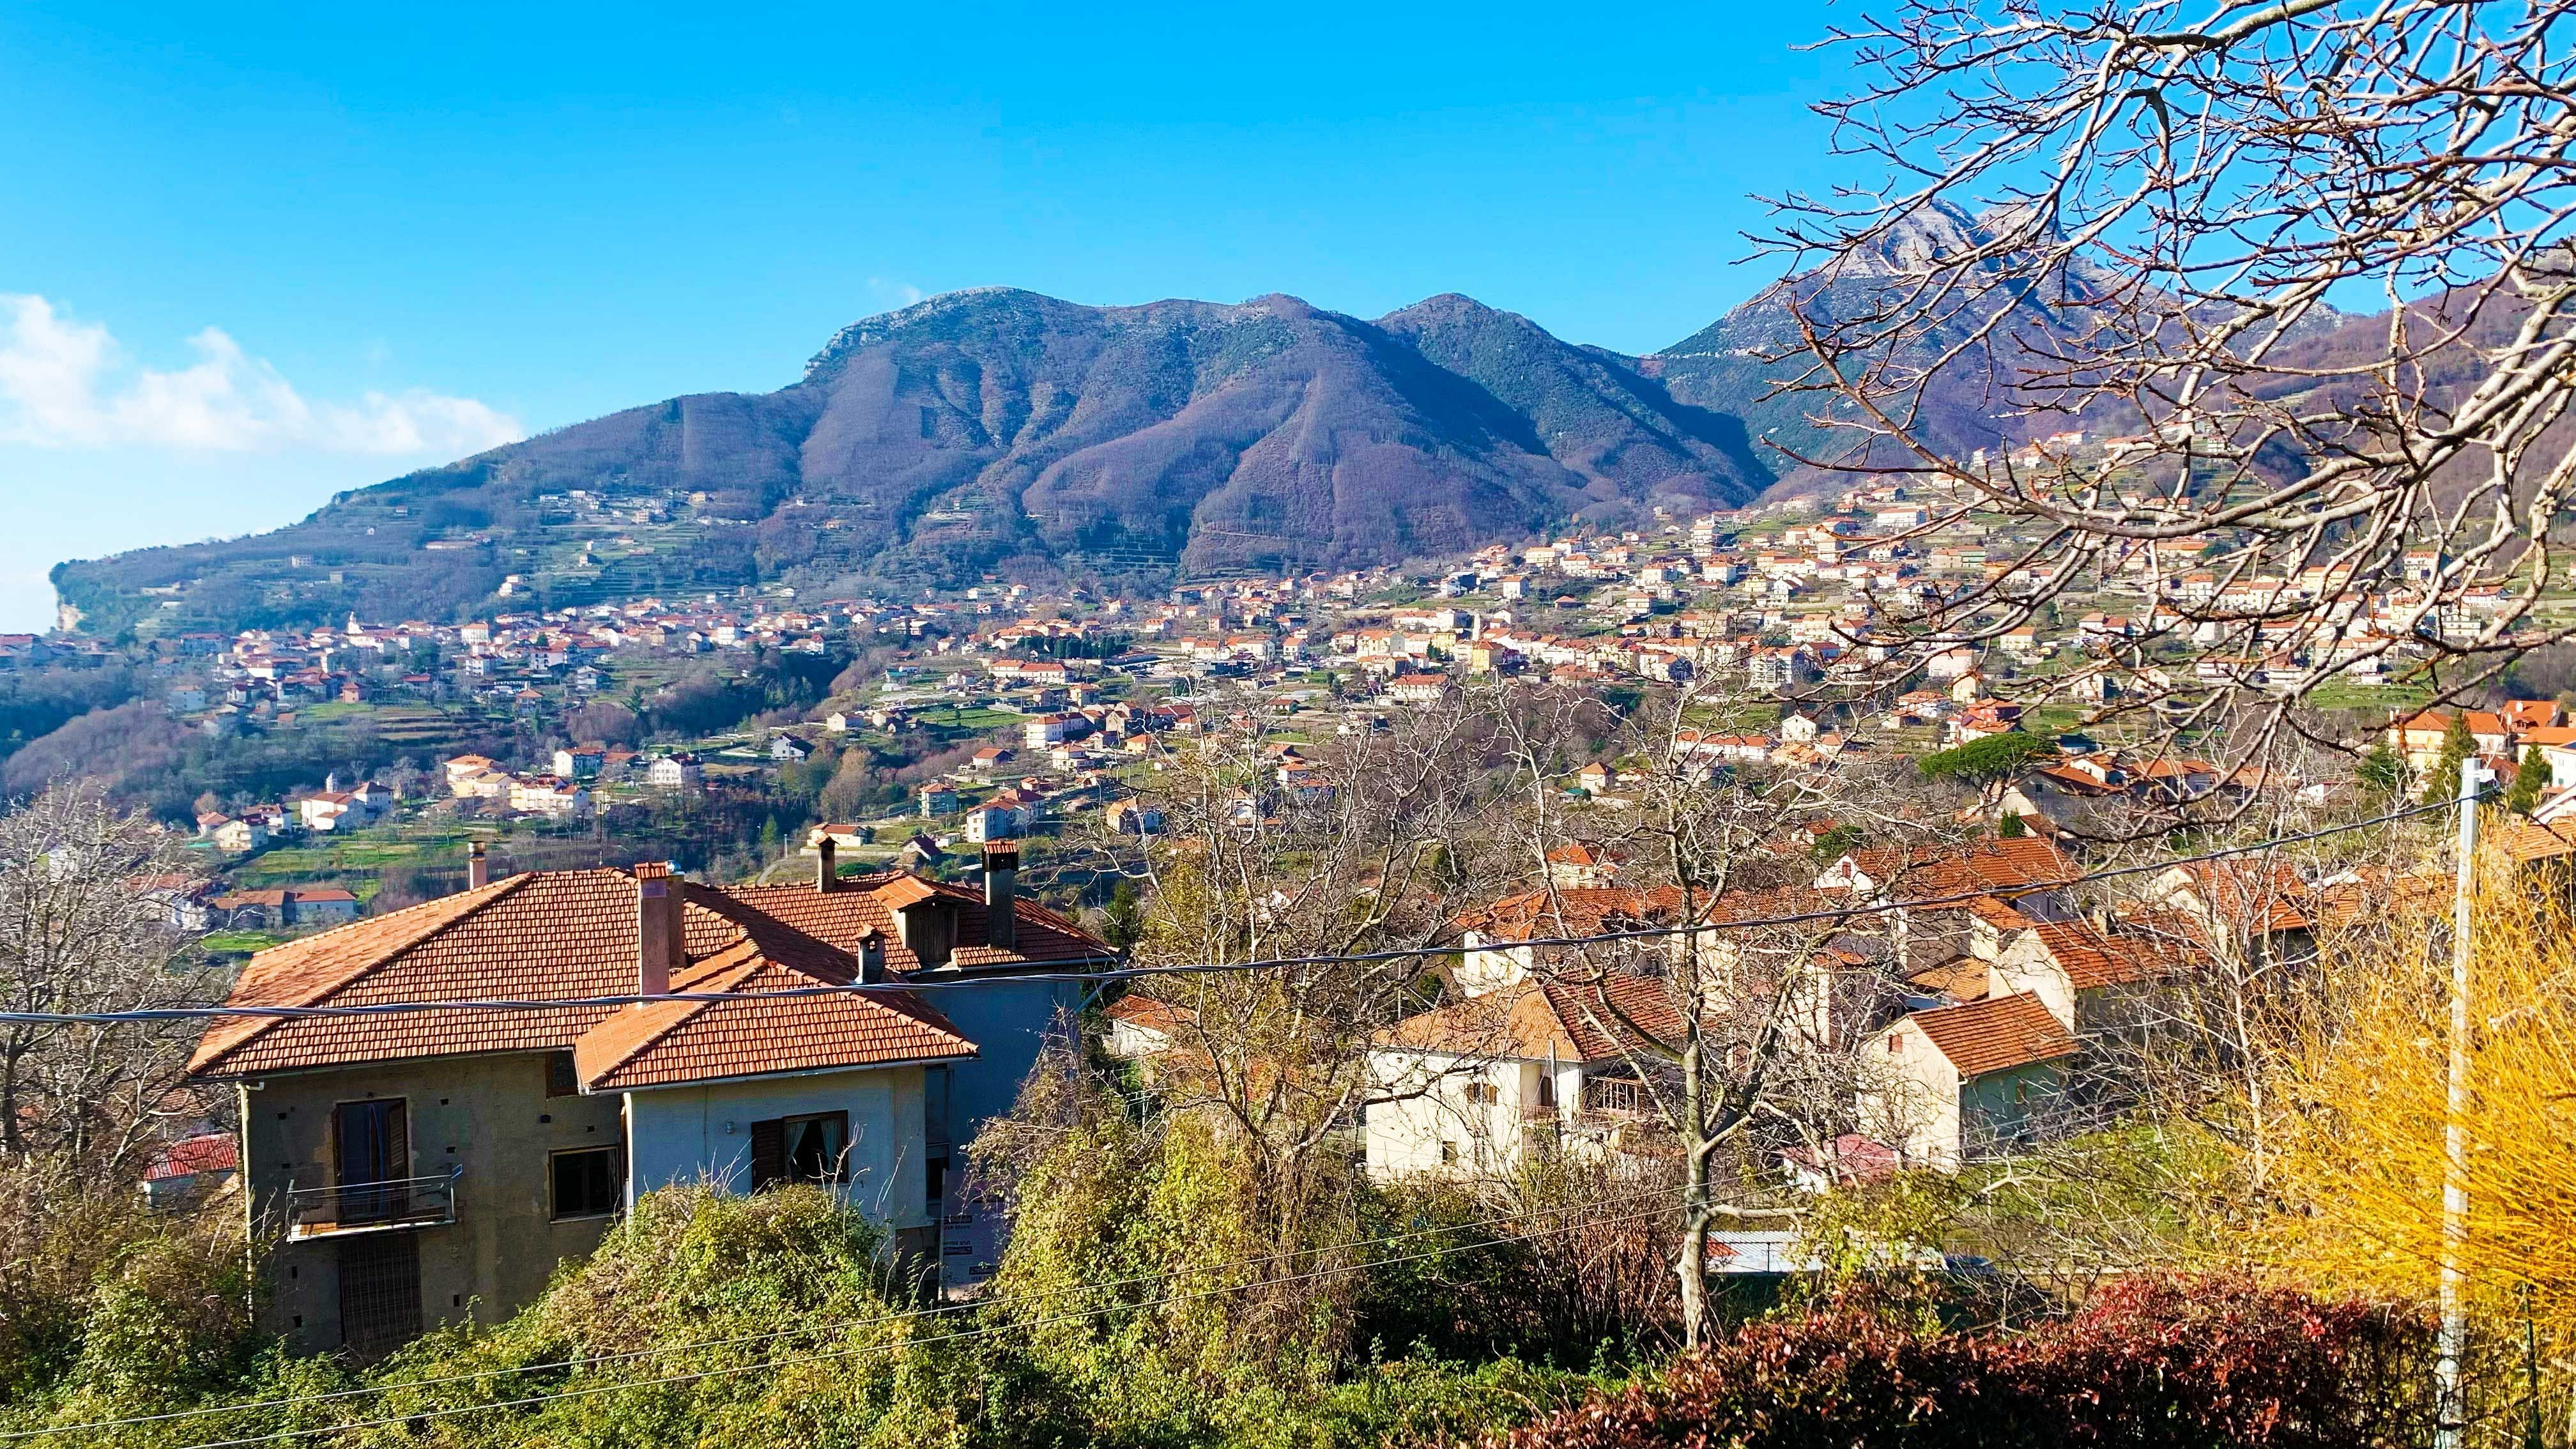 JWguest Apartment at Pianillo, Campania | Residence "Alma" on the Amalfi Coast | Jwbnb no brobnb 5